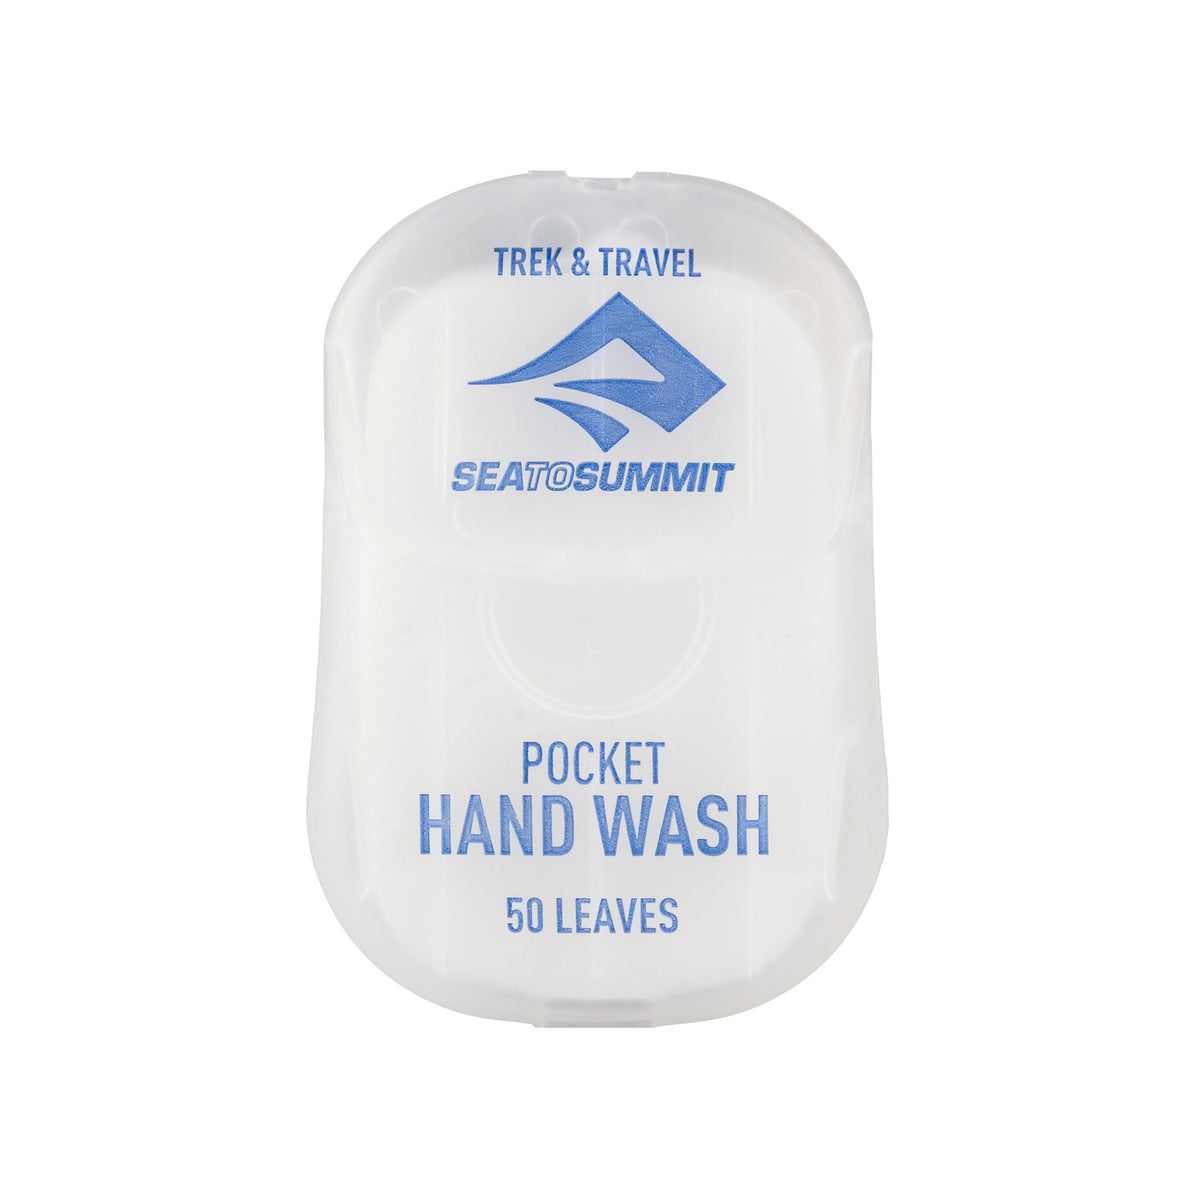 Hand Wash || Trek and Travel Pocket Soaps